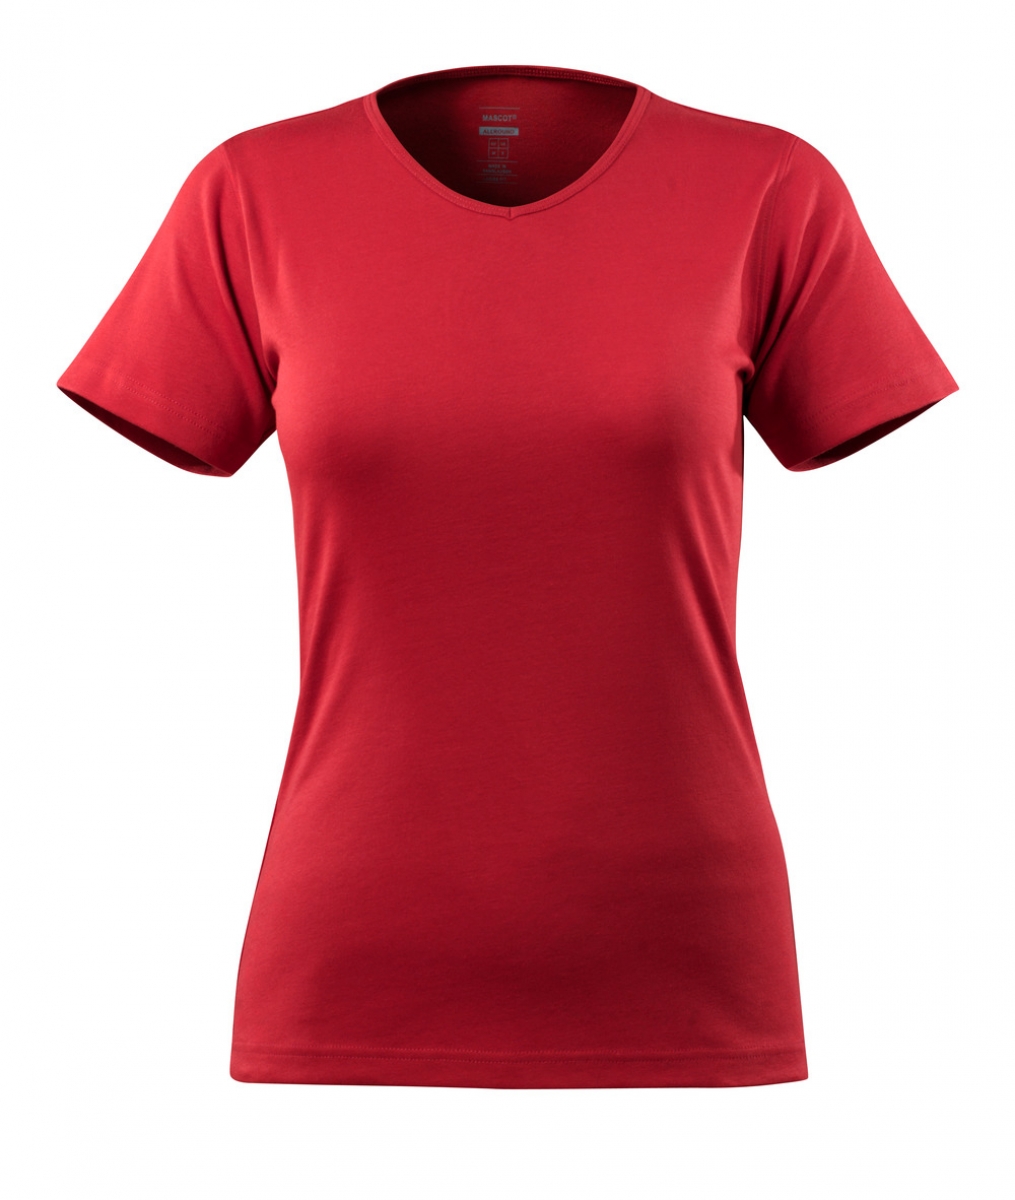 MASCOT-Worker-Shirts, Damen-T-Shirt, Nice, 220 g/m,  rot